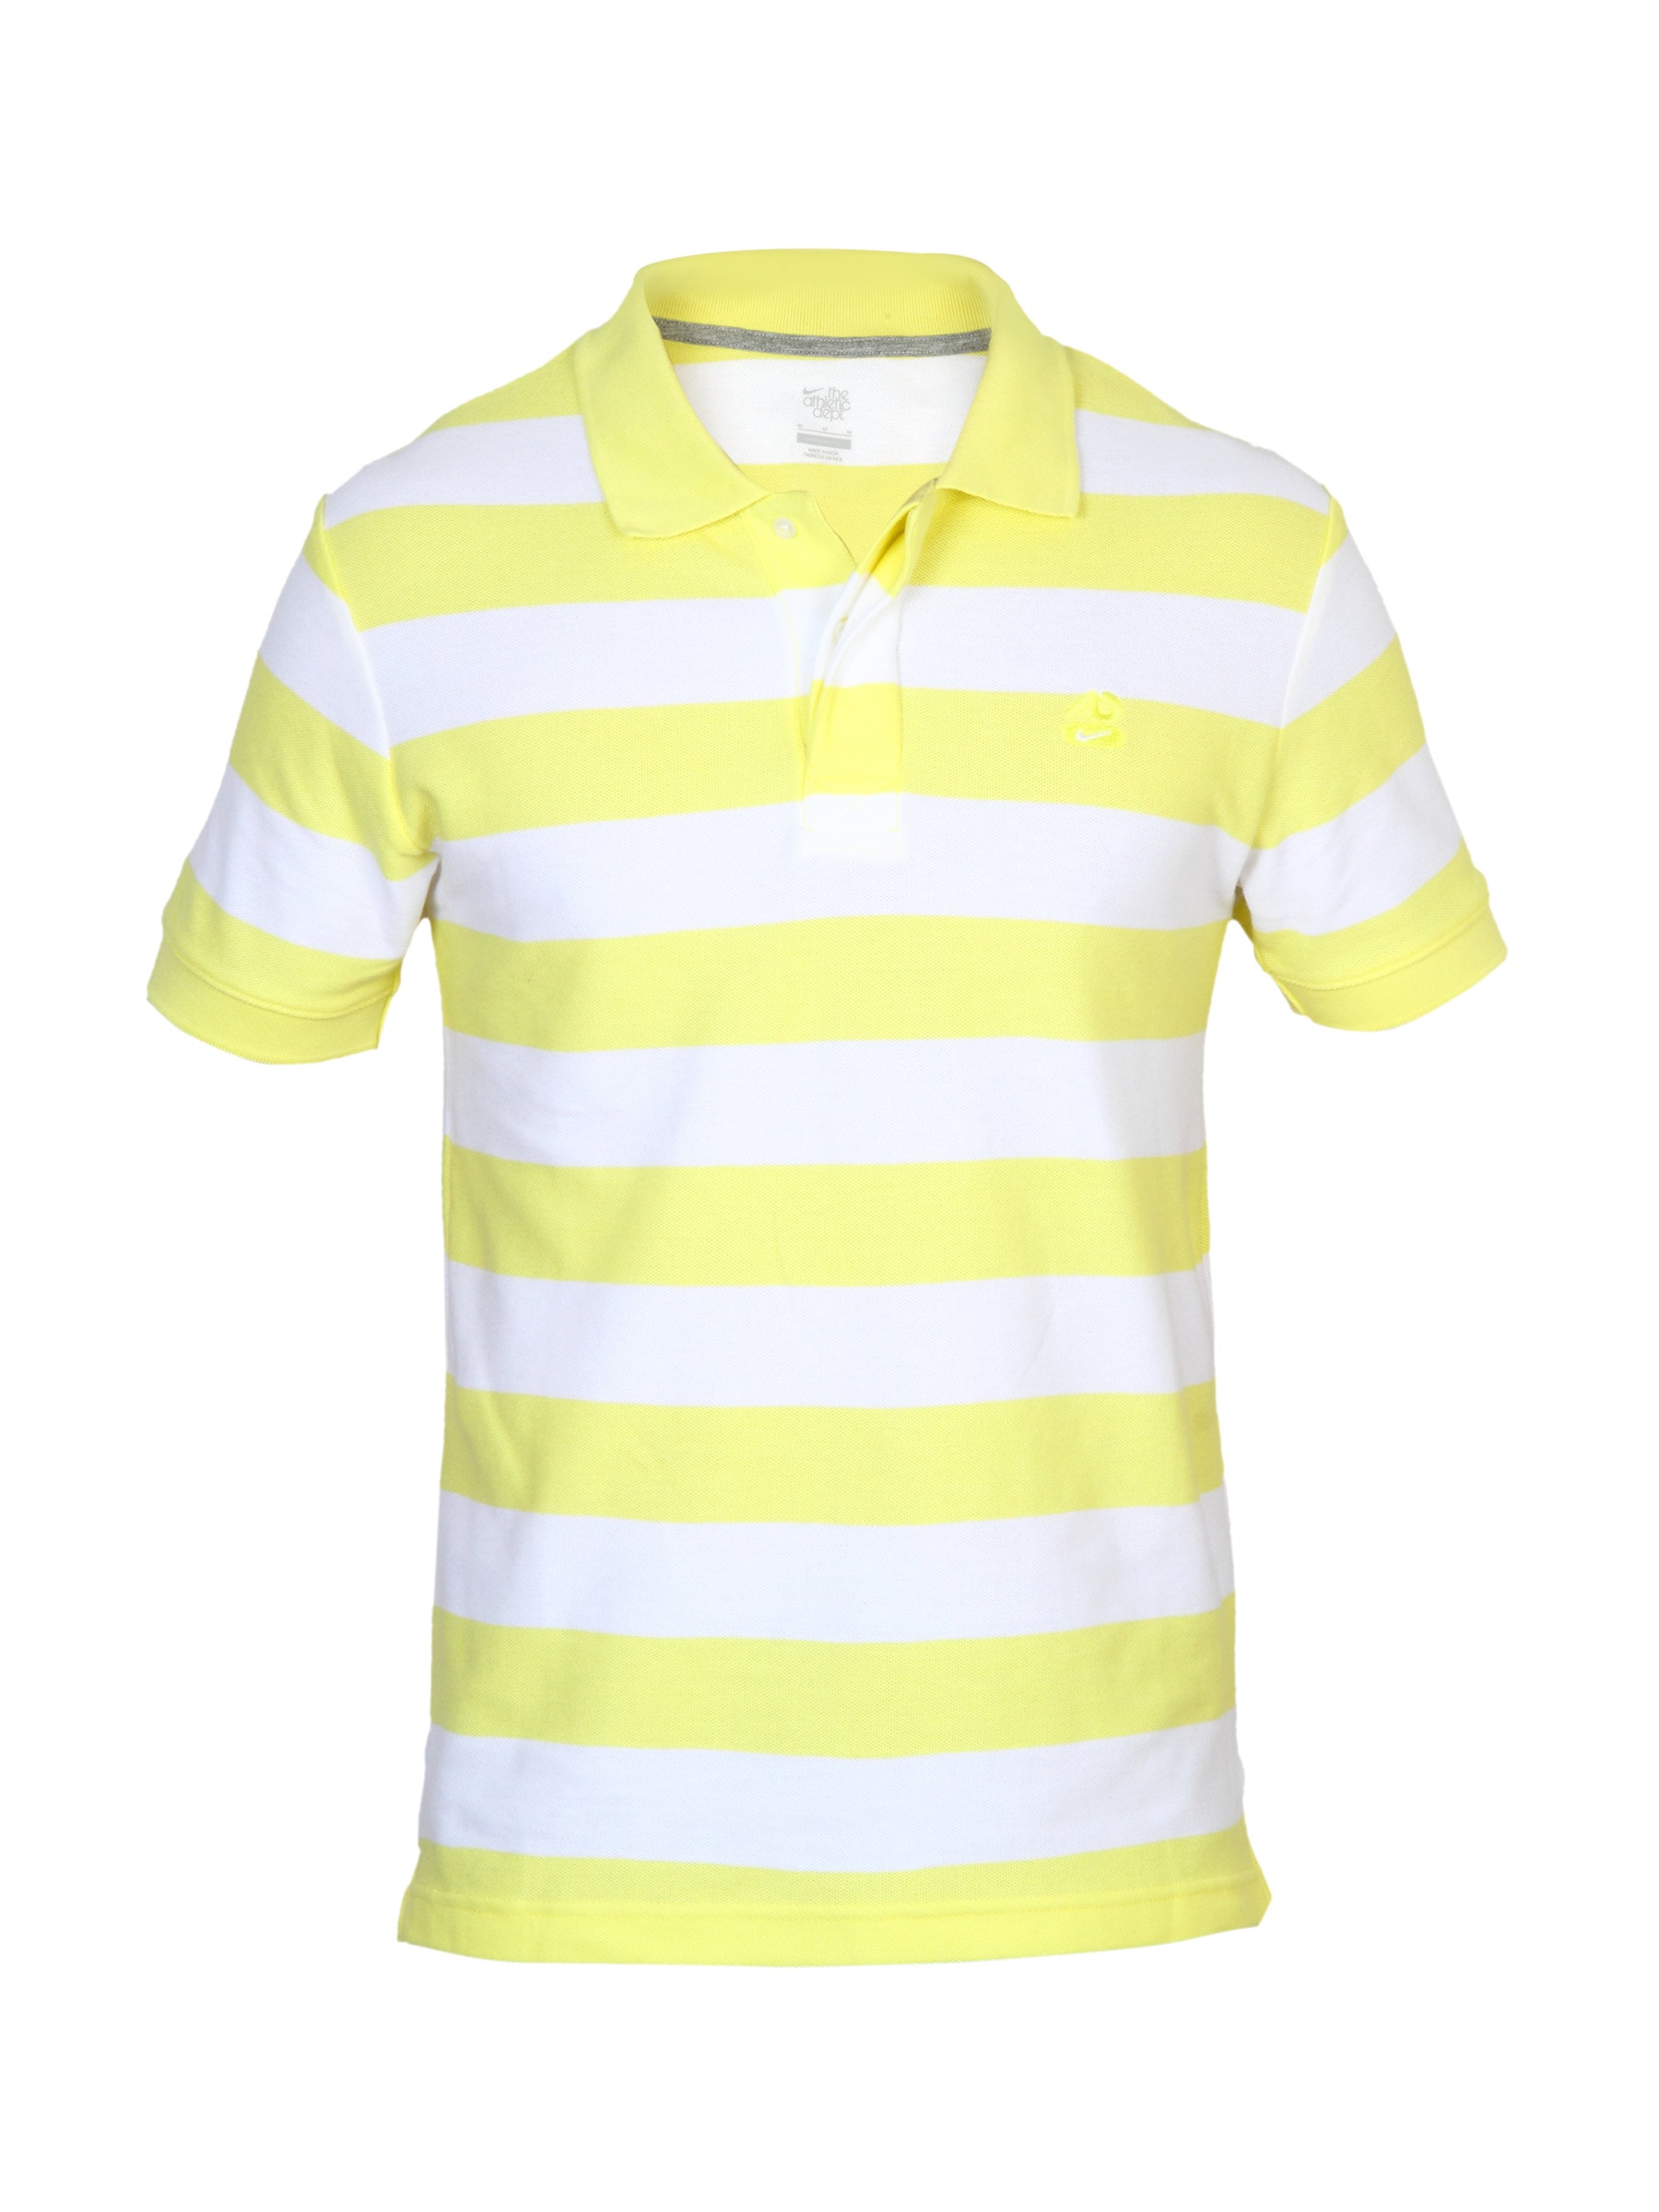 Nike Men's Club Pique Polo Med Yellow White T-shirt